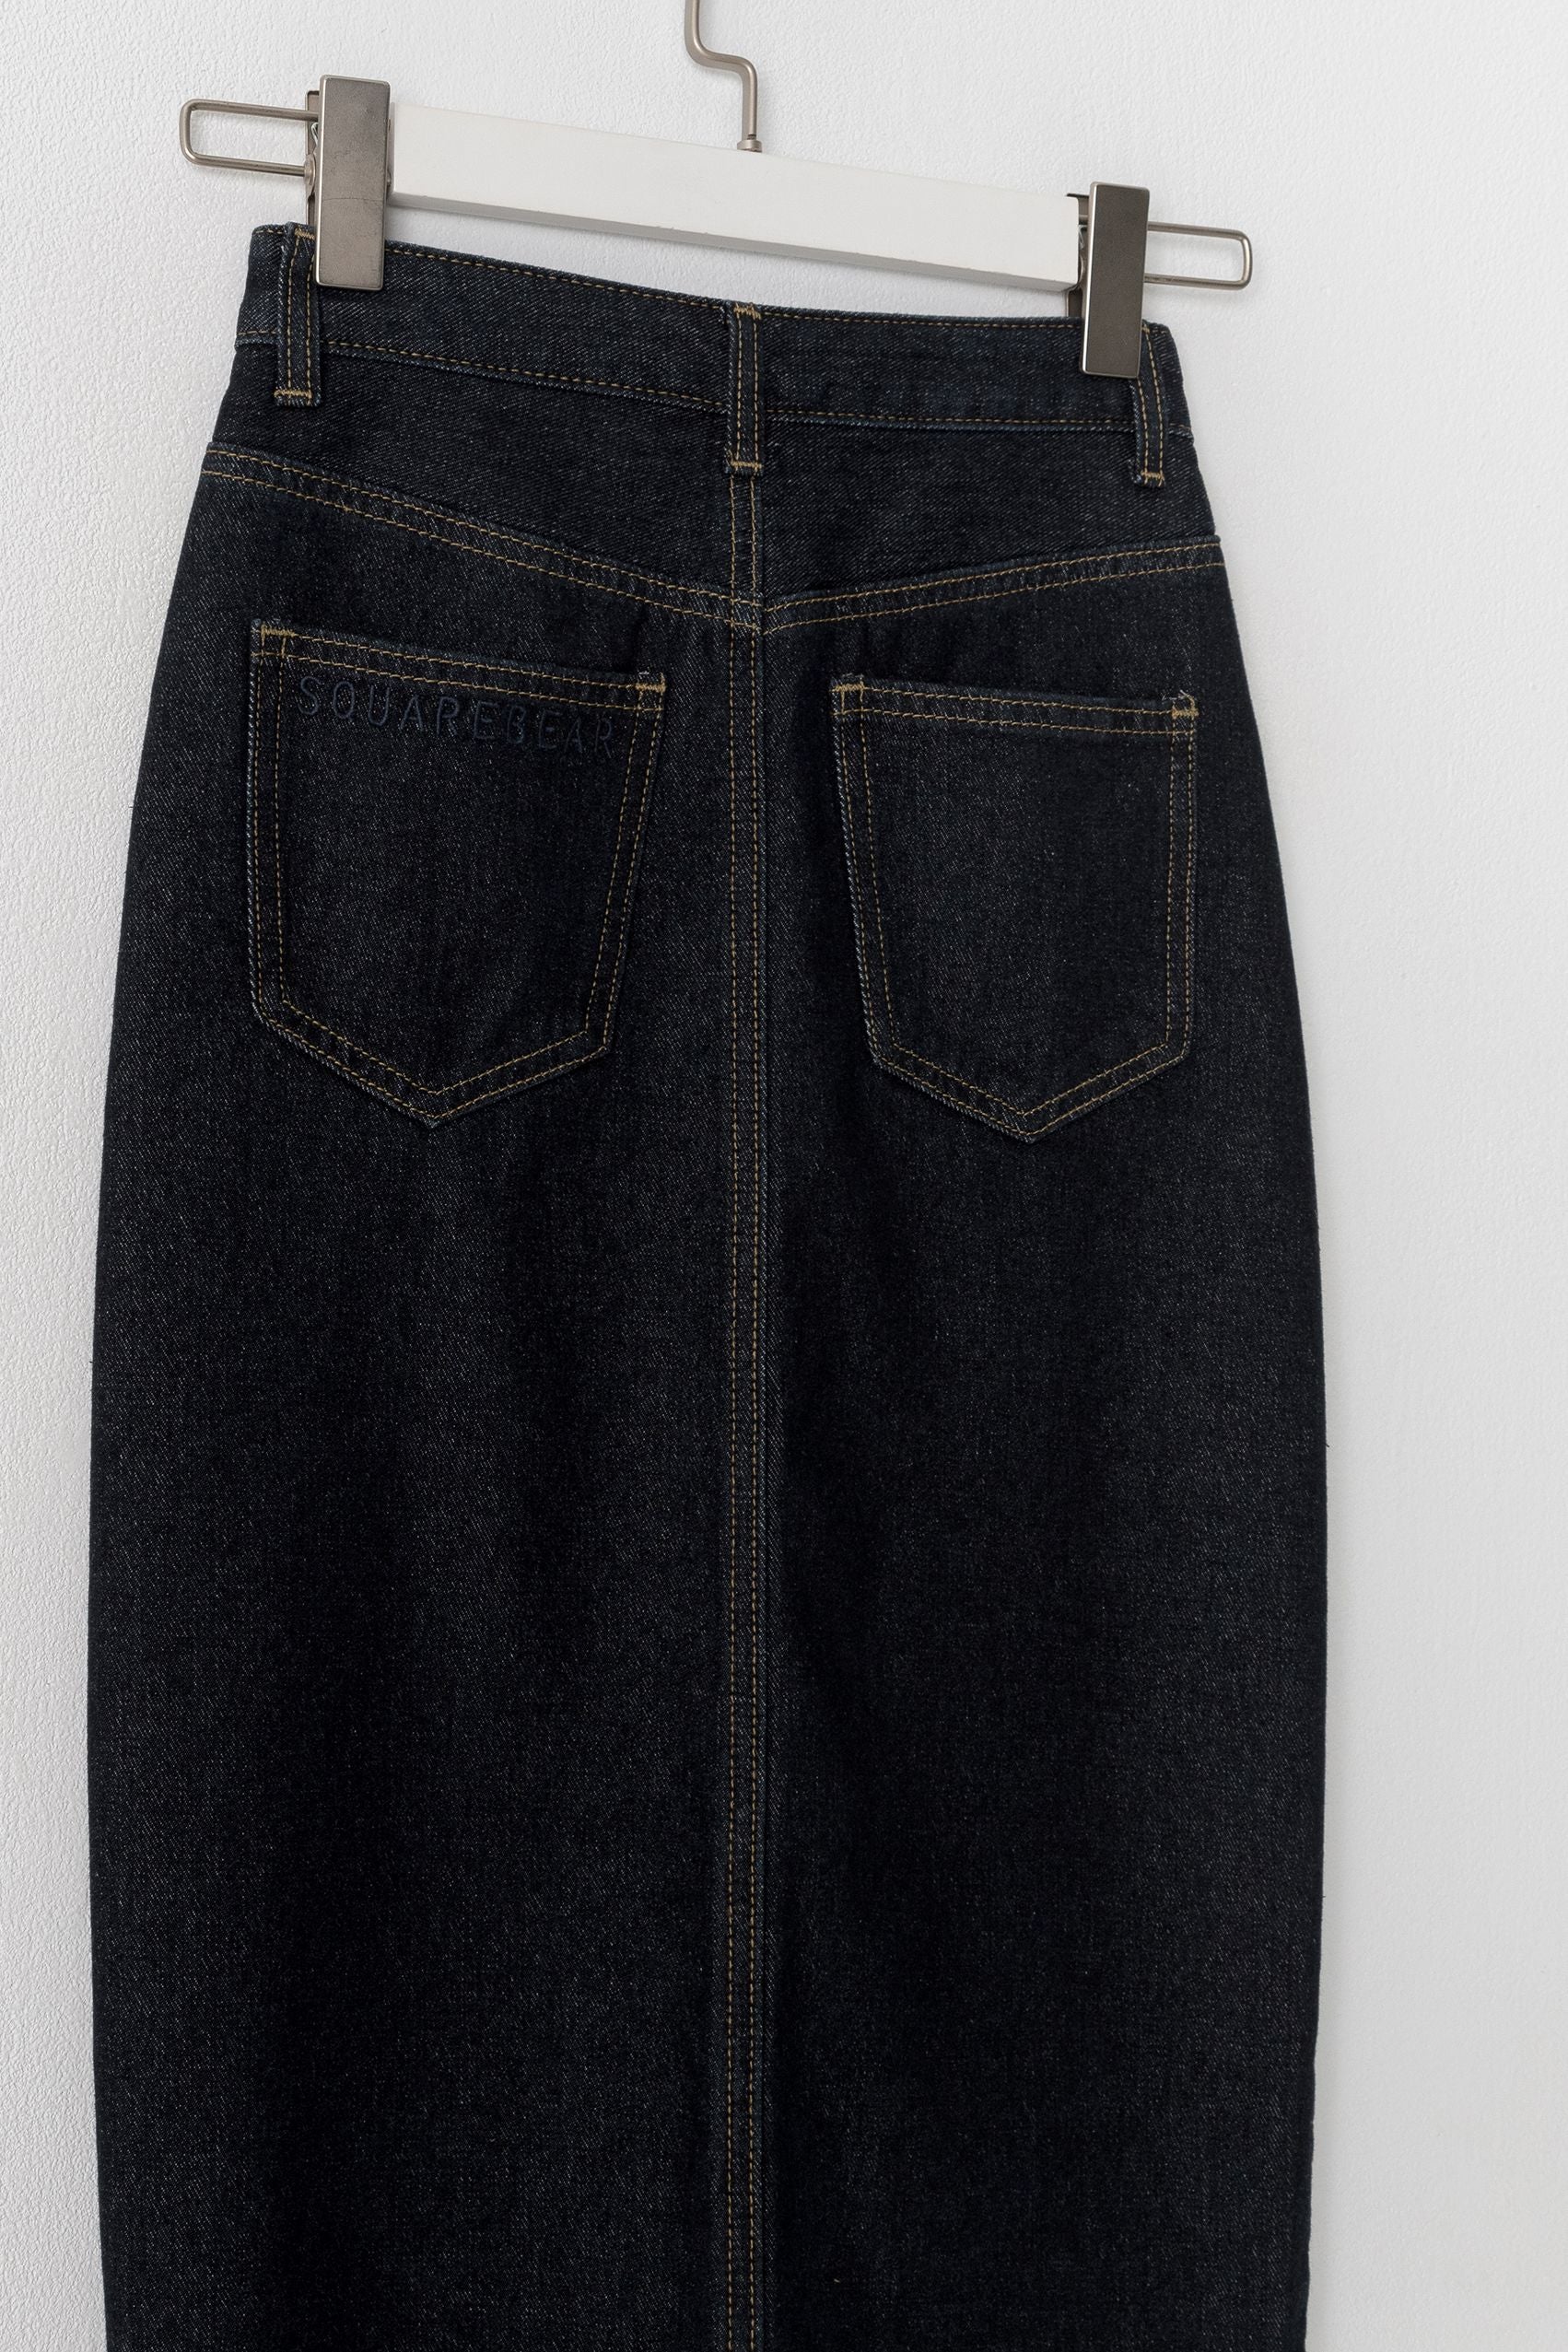 Spring Edition Denim Skirt